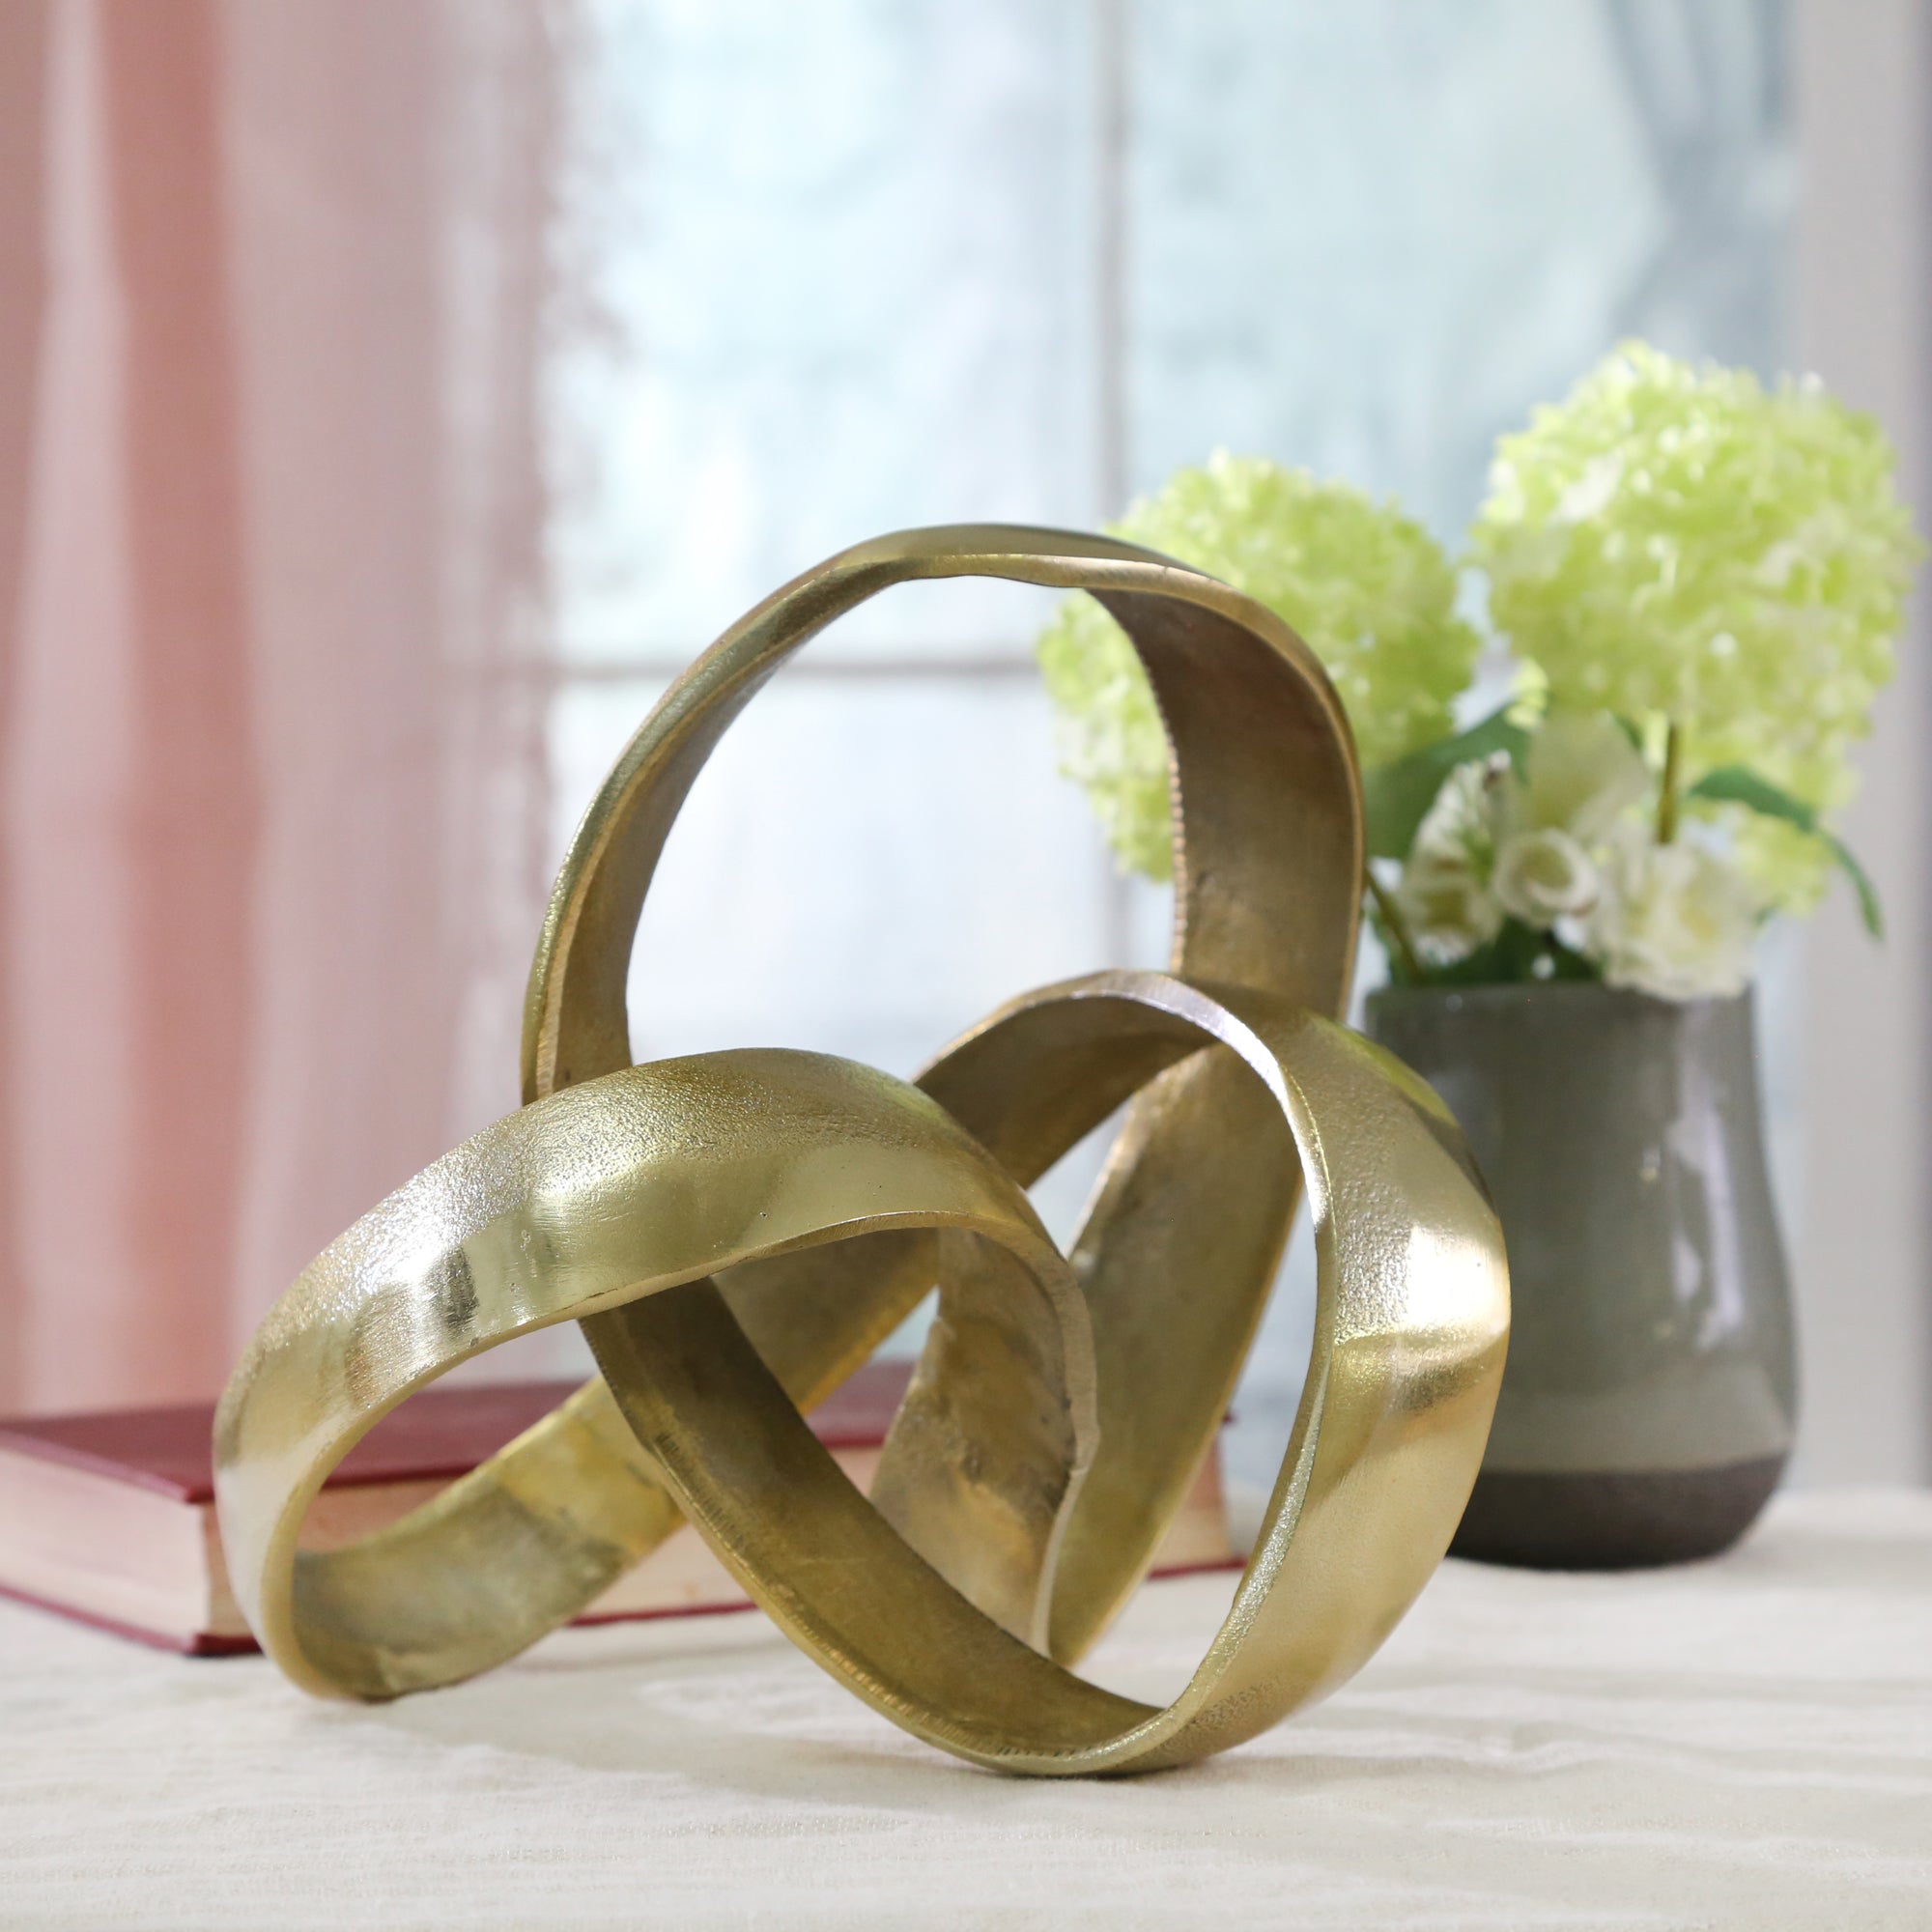 Aluminum Knot Sculpture - Gold